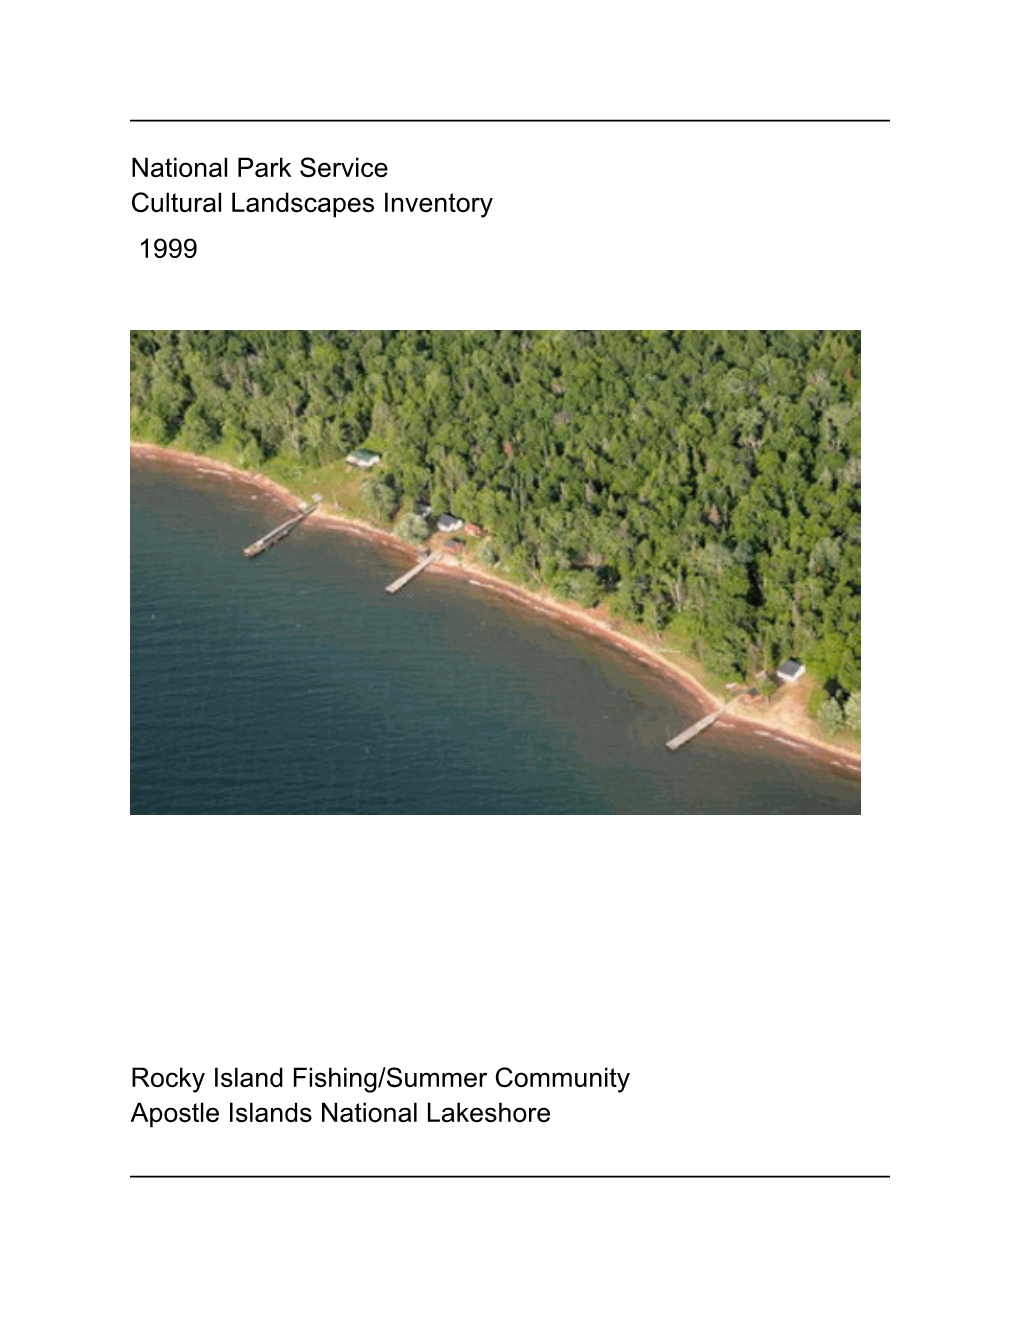 Rocky Island Fishing/Summer Community, Apostle Islands